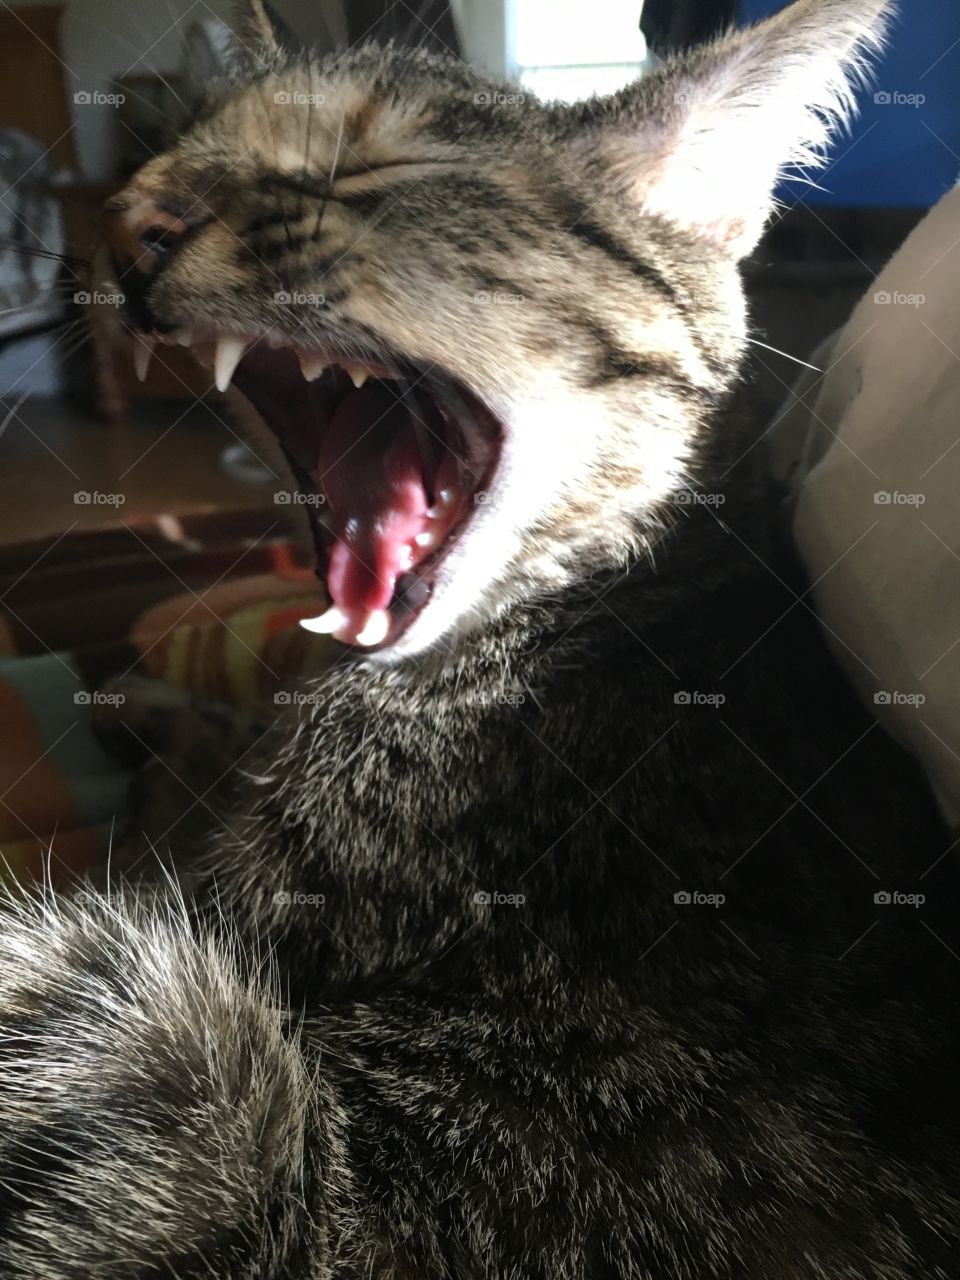 Yawning kitty. Look at those sharp teeth